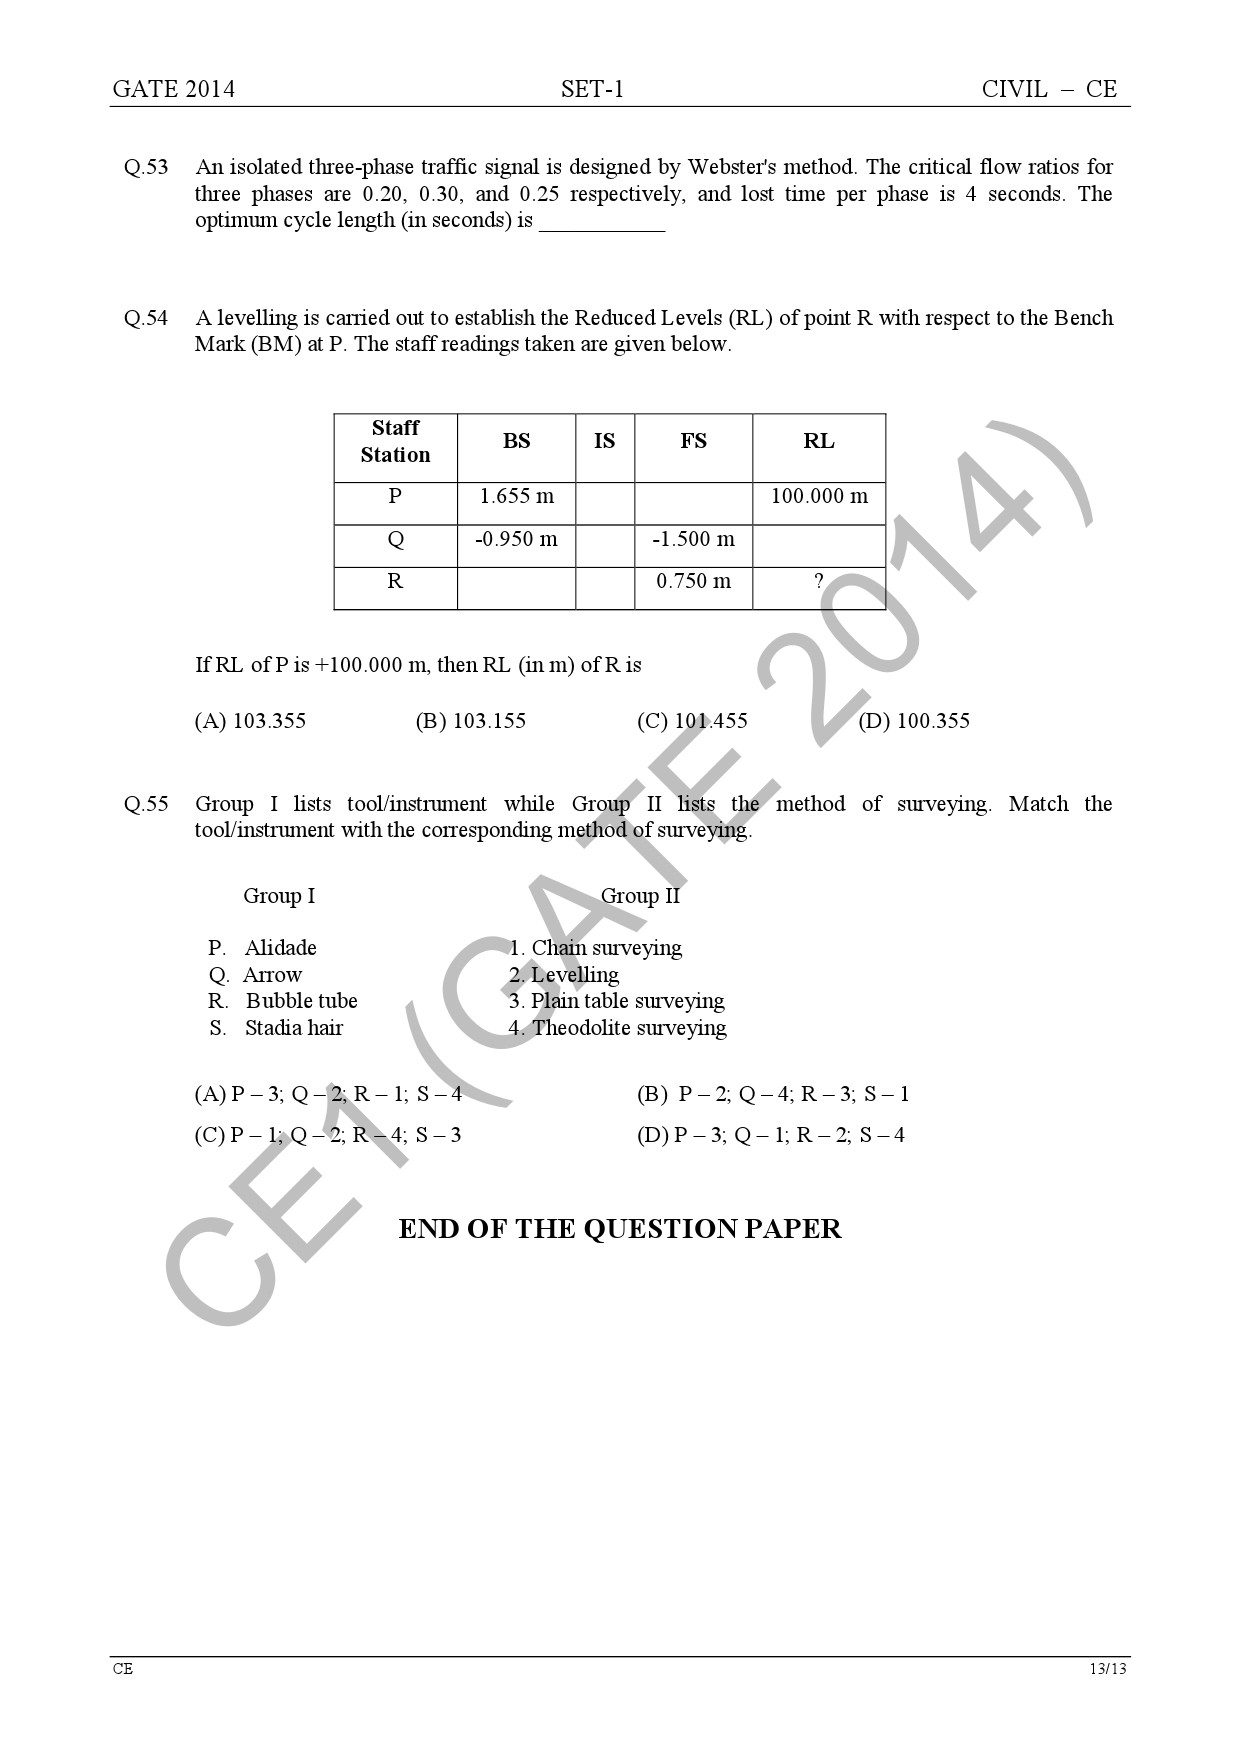 GATE Exam Question Paper 2014 Civil Engineering Set 1 19